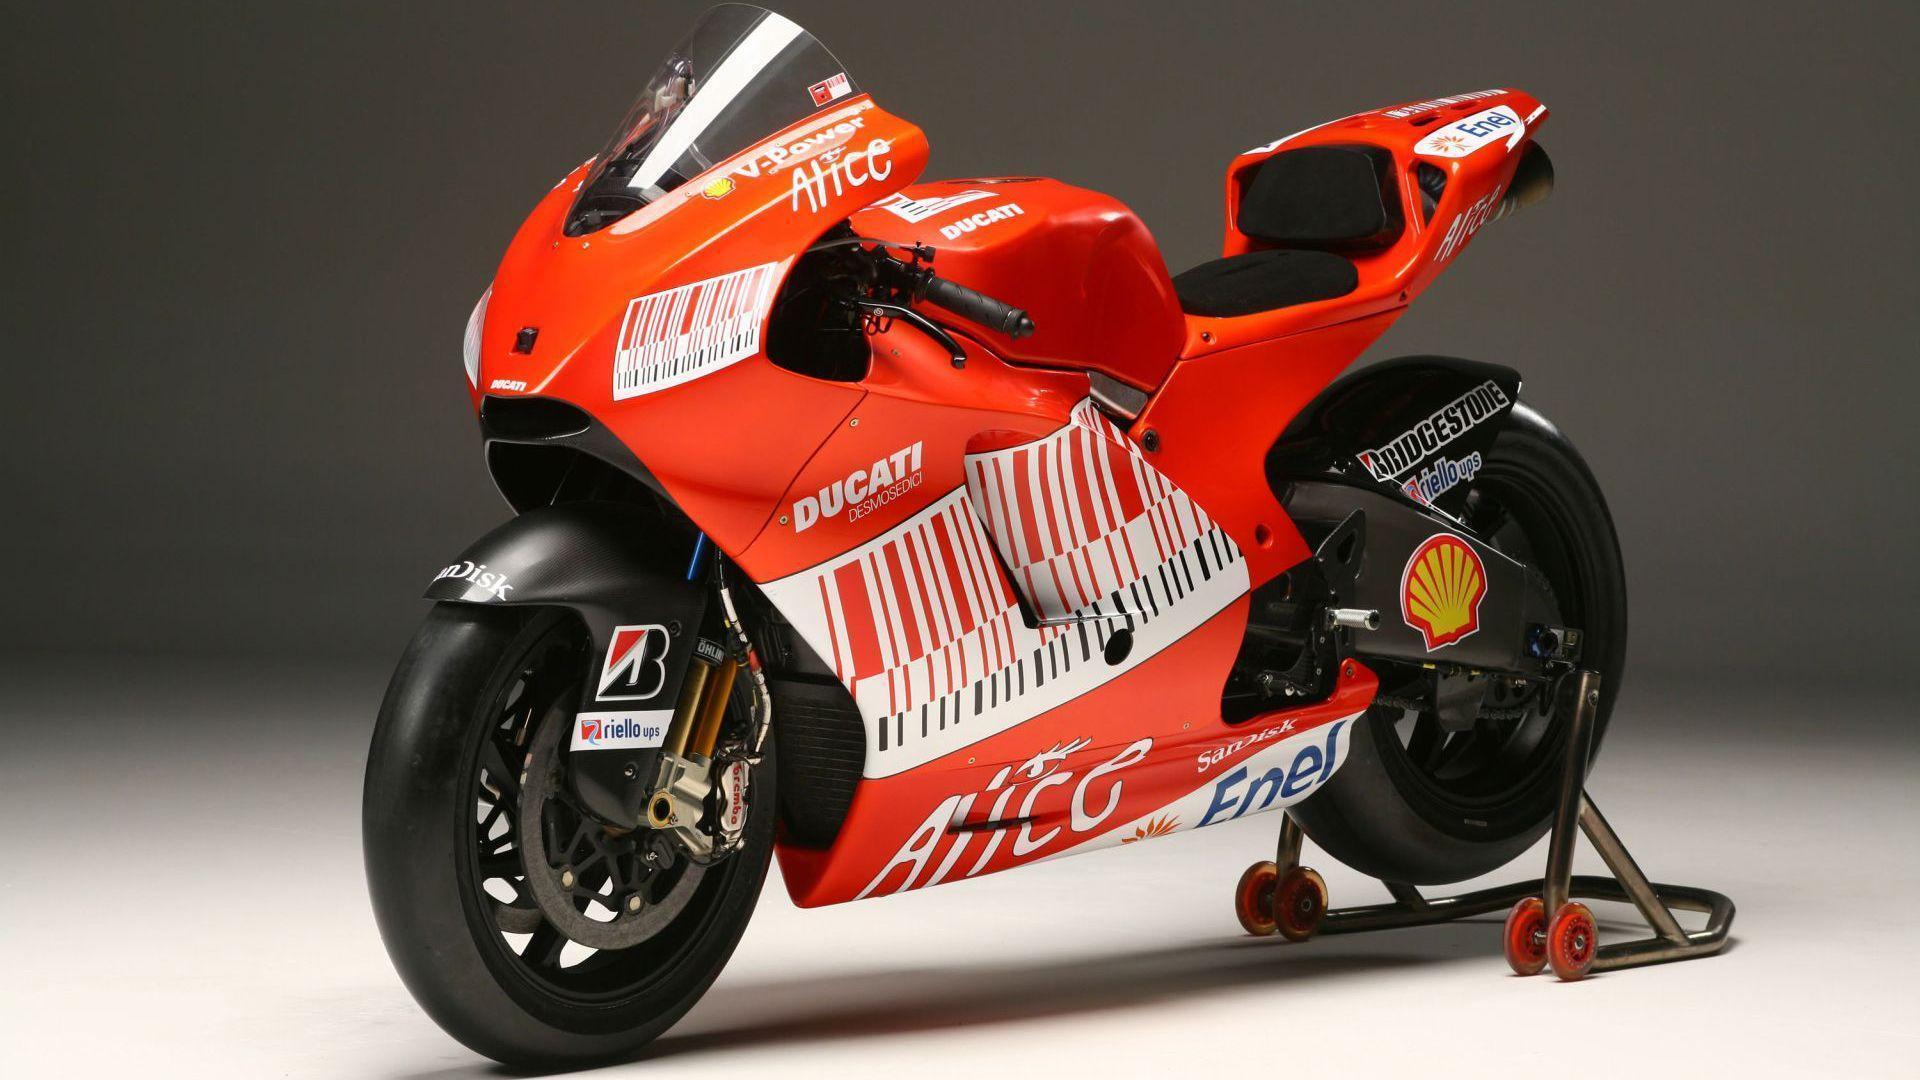 Ducati Sports bike -HD. Hangout. Ducati and Motorbikes